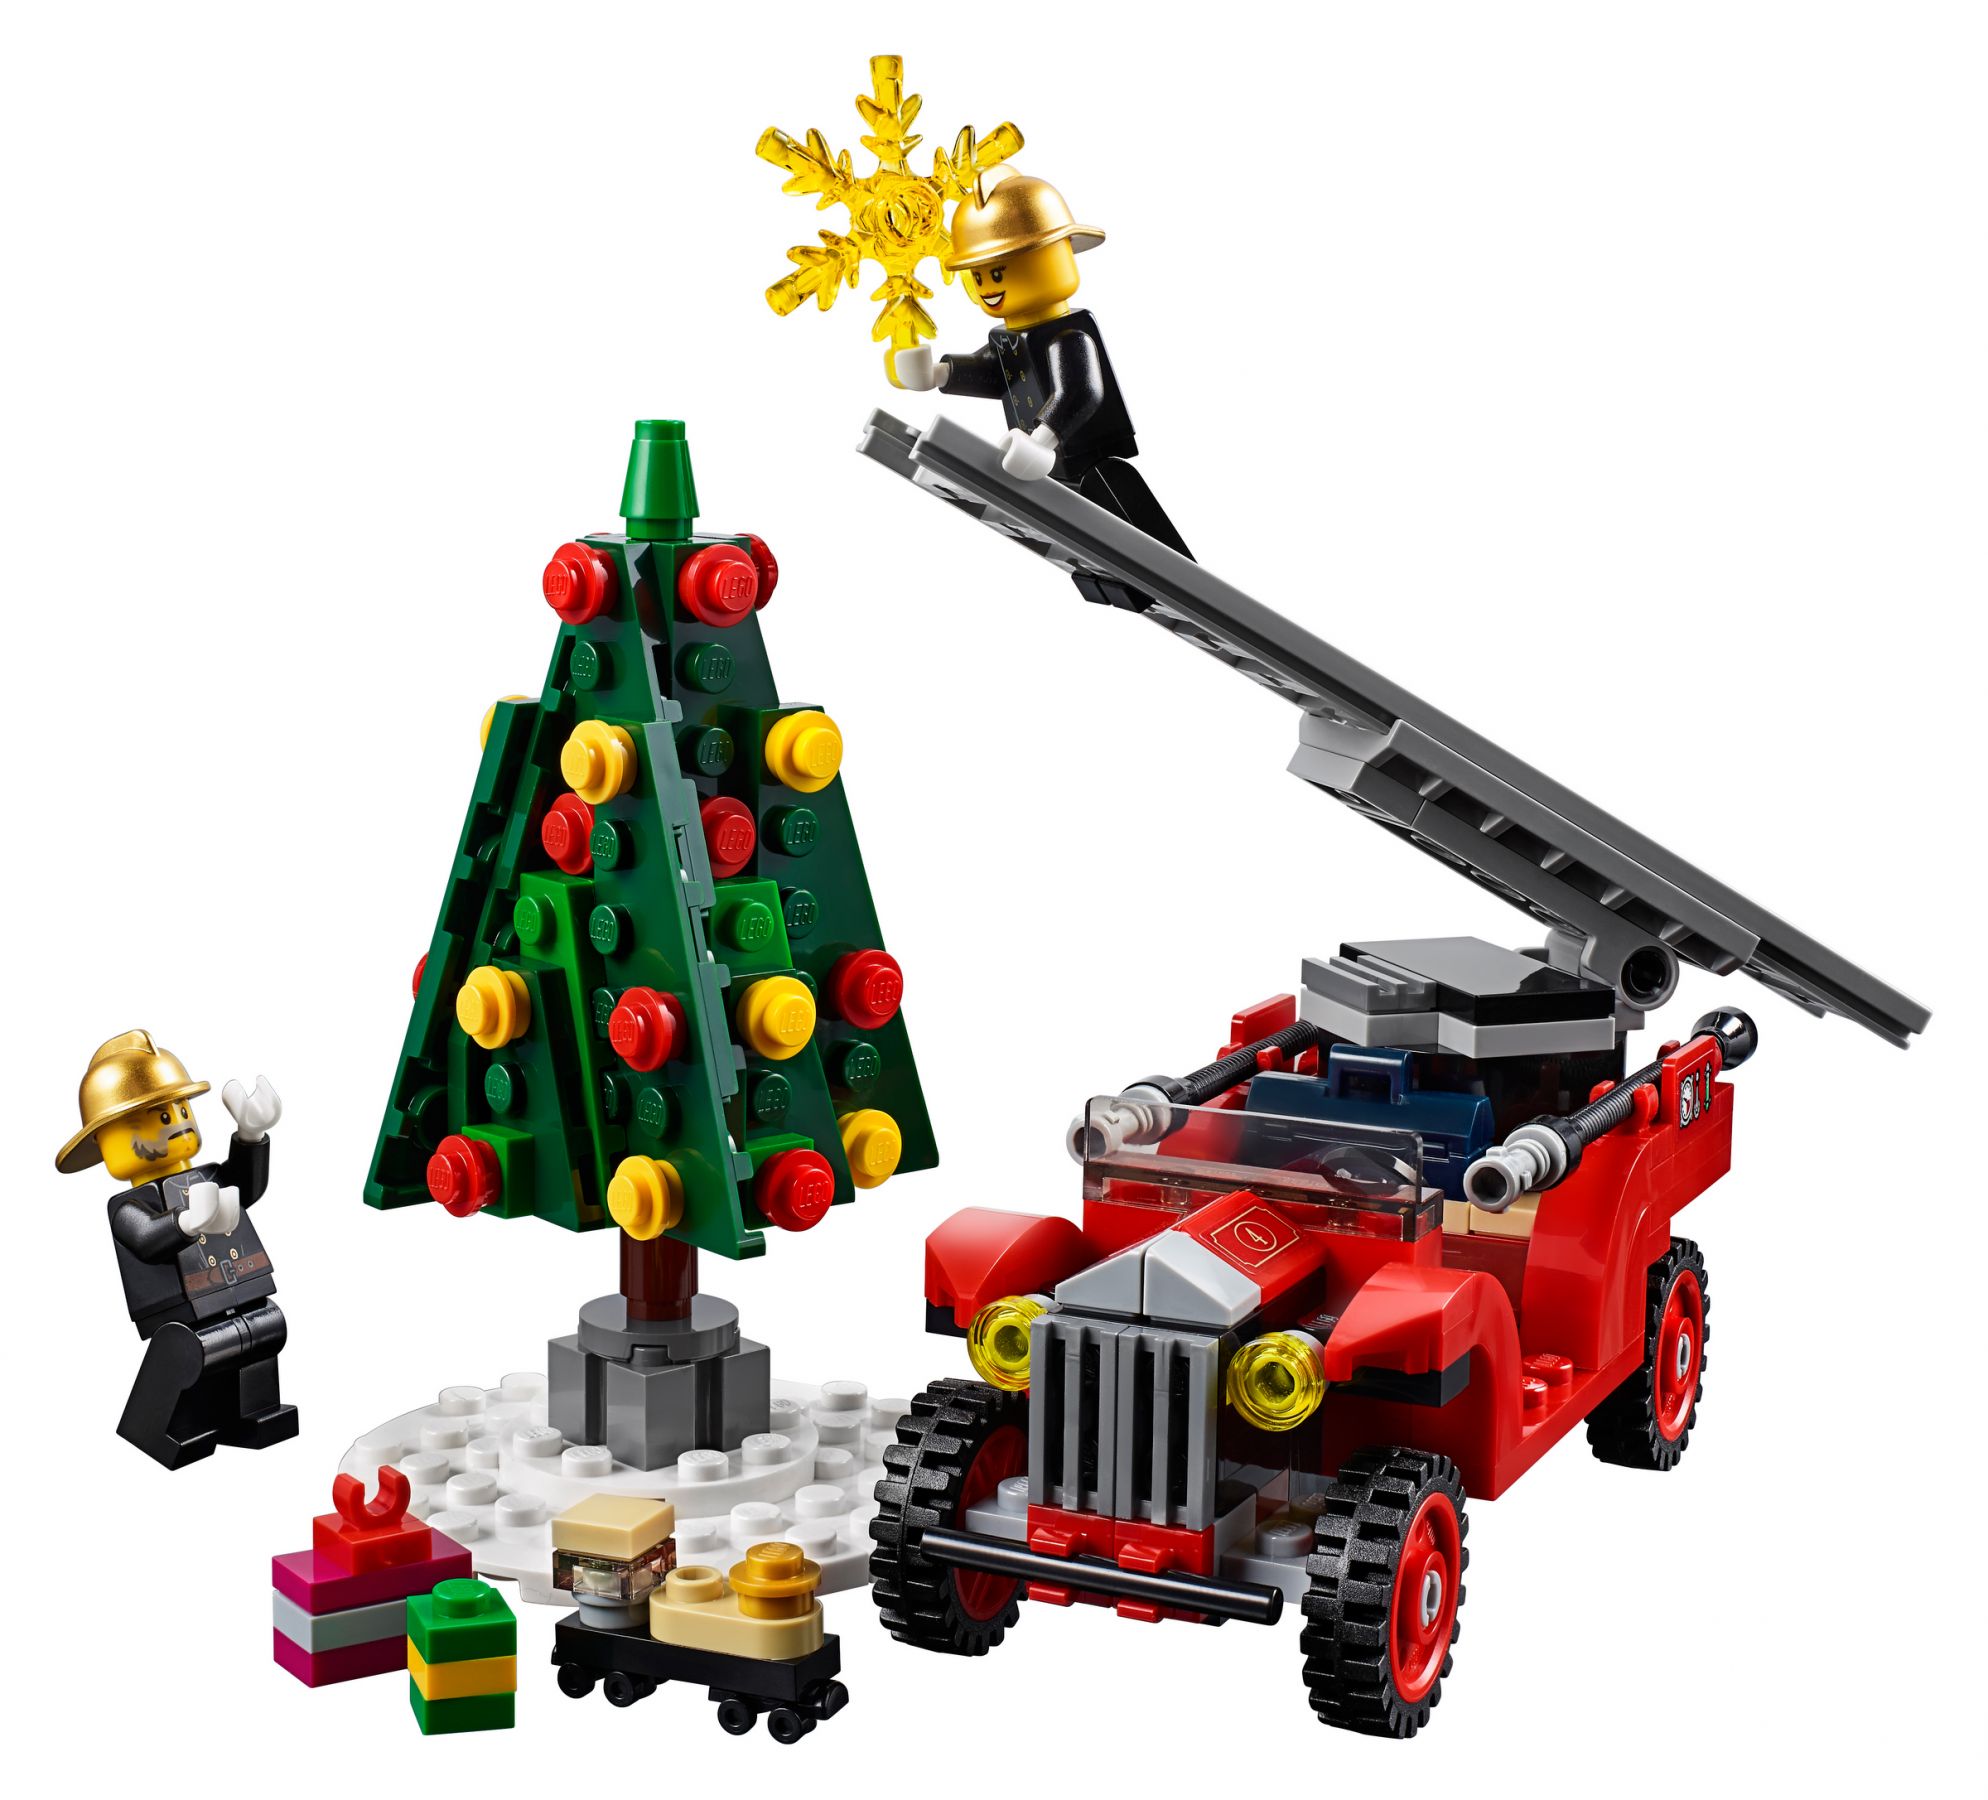 LEGO Advanced Models 10263 Winterliche Feuerwehrstation LEGO_10263_alt8.jpg